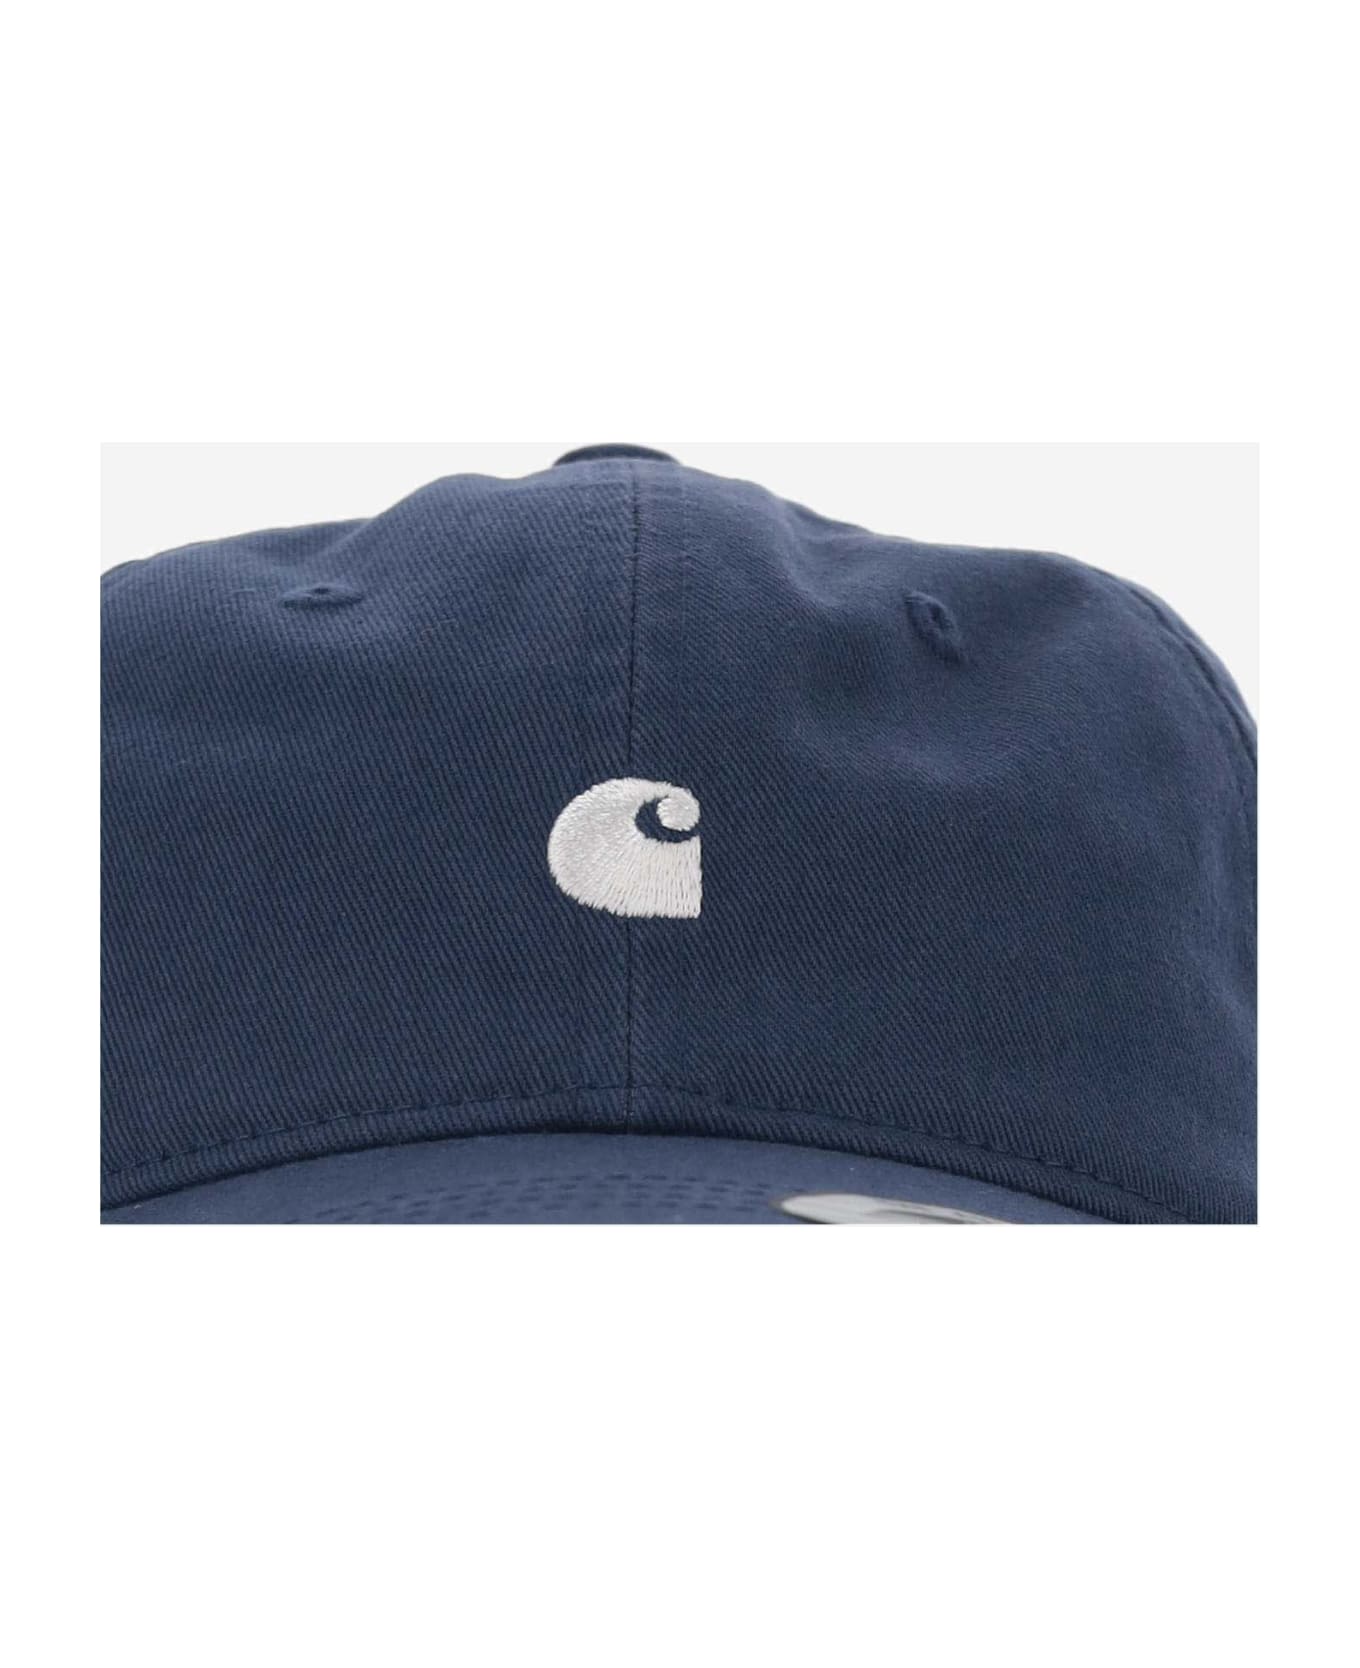 Carhartt Canvas Hat With Logo - Blue 帽子